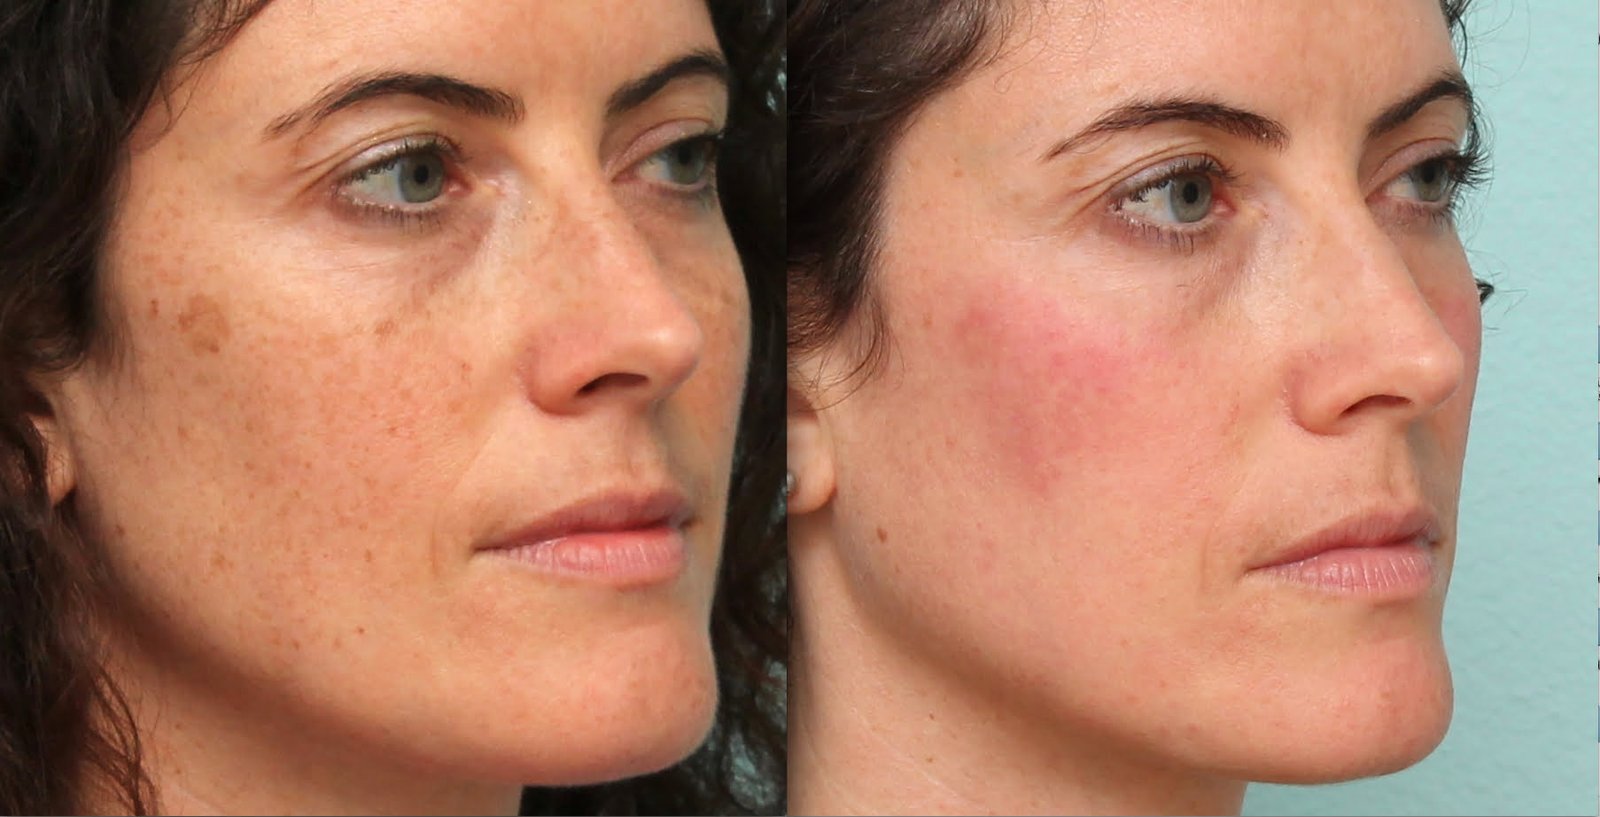 Diminish facial spots permanently